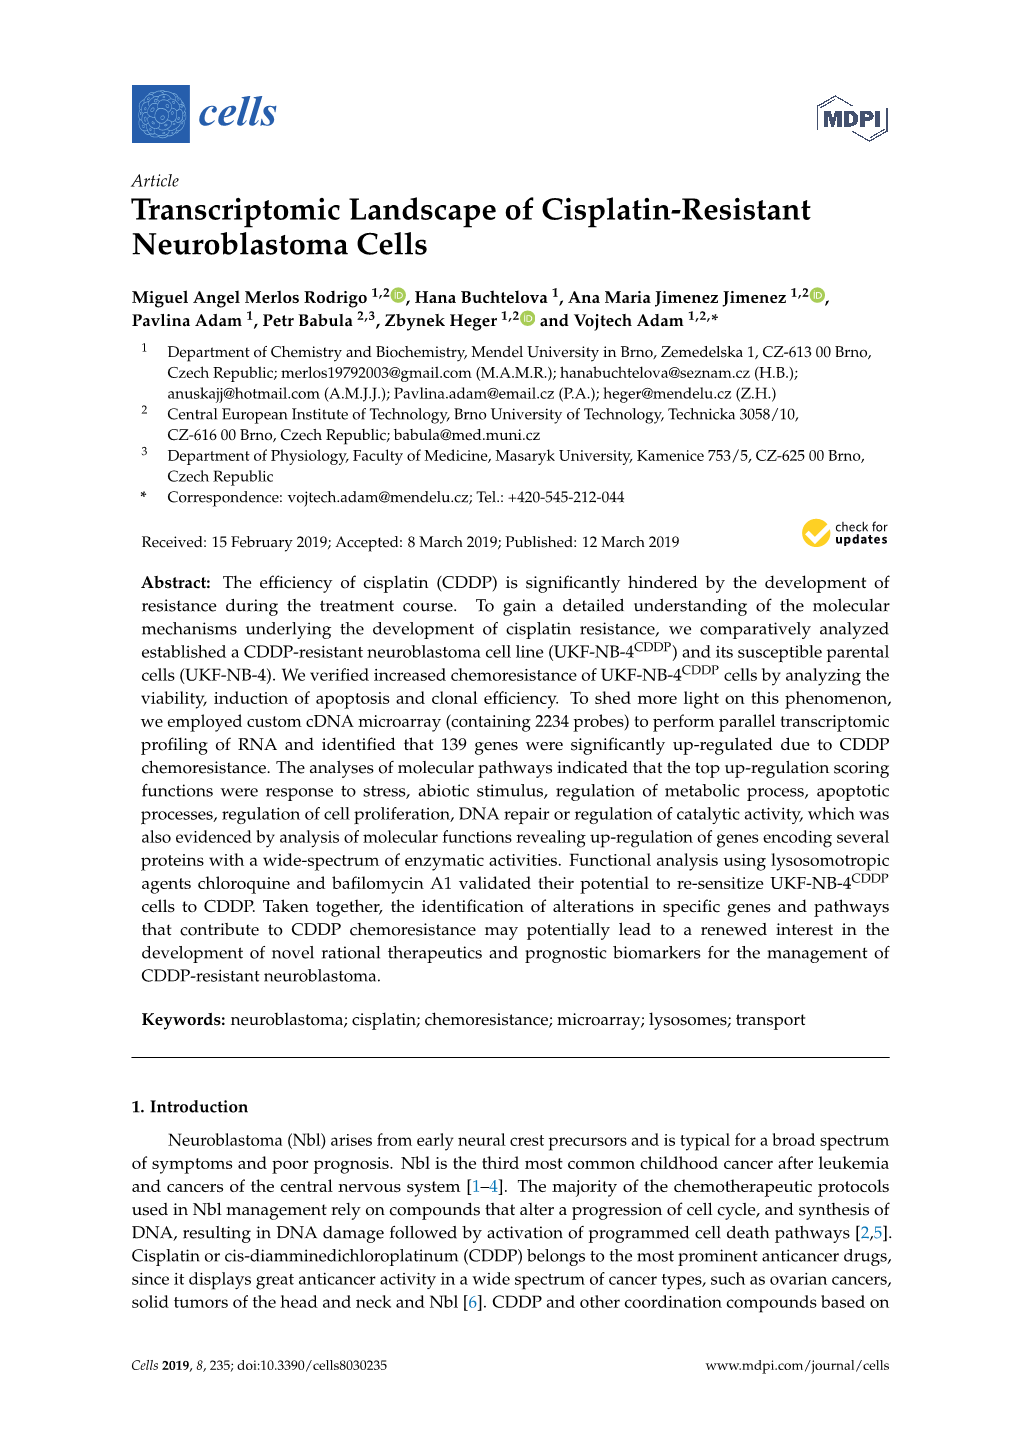 Transcriptomic Landscape of Cisplatin-Resistant Neuroblastoma Cells